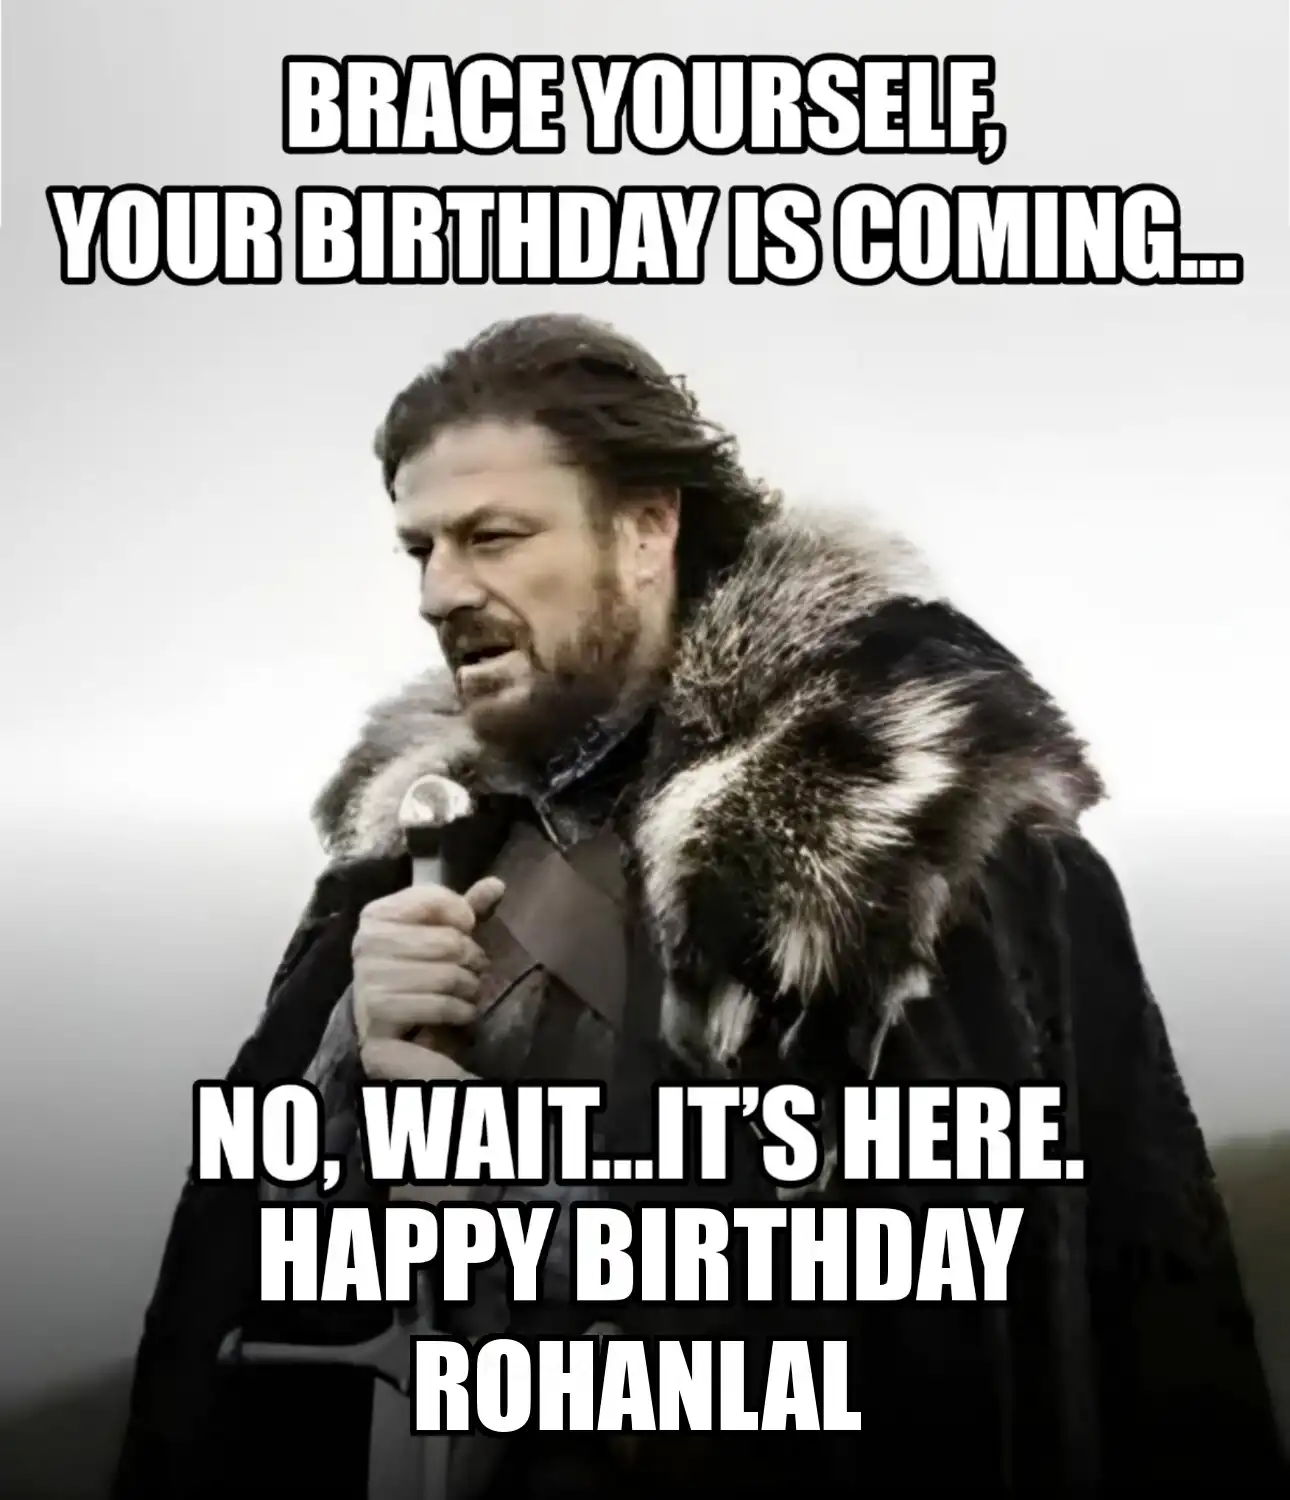 Happy Birthday Rohanlal Brace Yourself Your Birthday Is Coming Meme